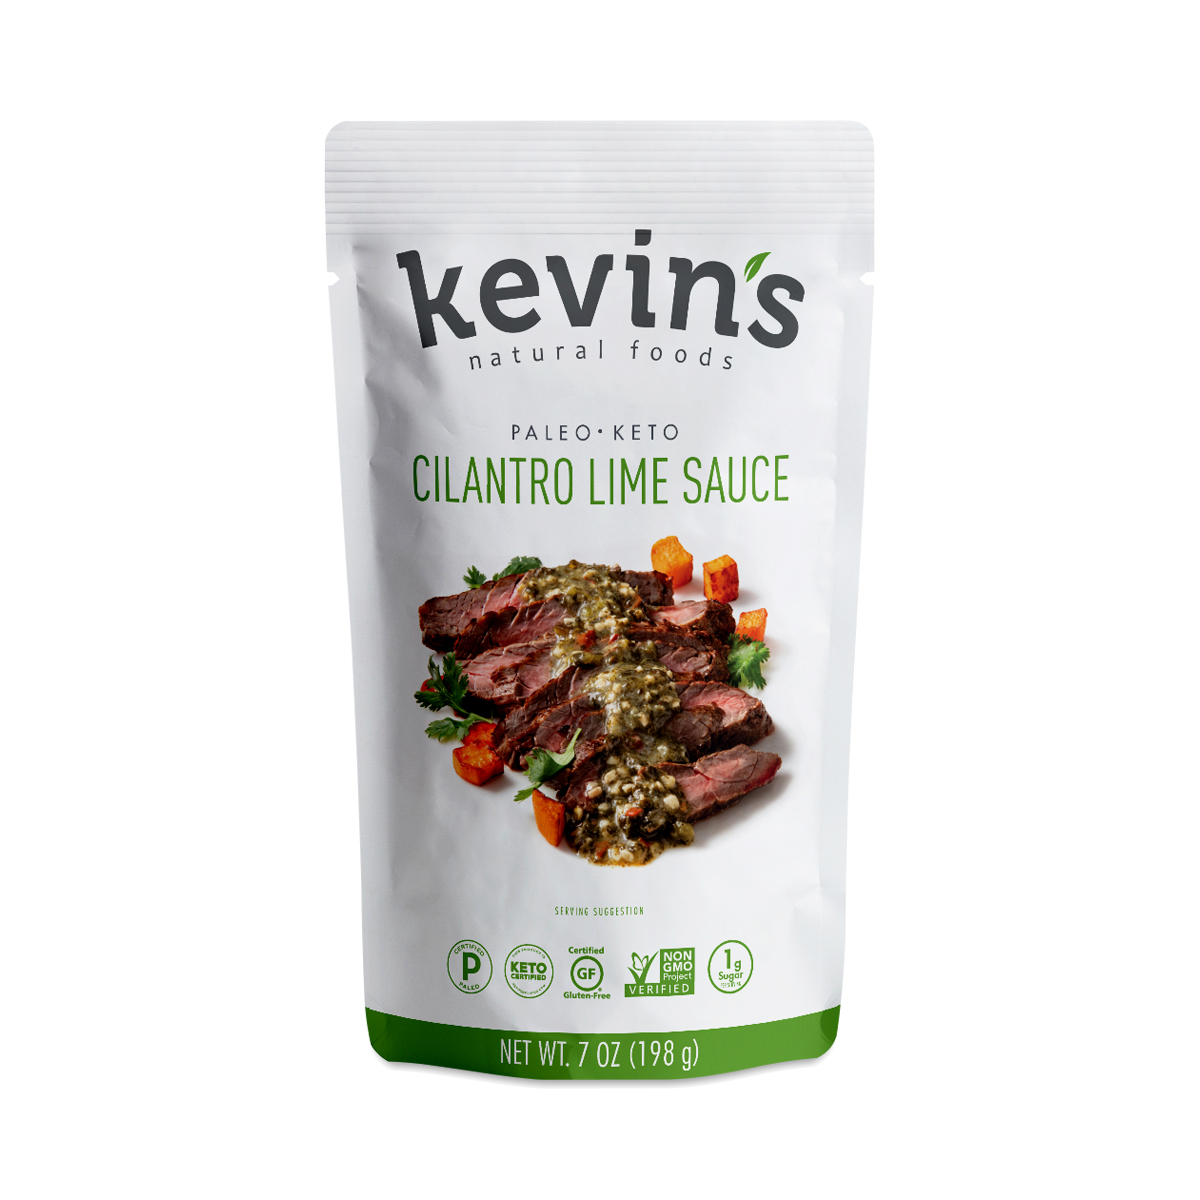 Kevin's Natural Foods Cilantro Lime Sauce 7 oz pouch